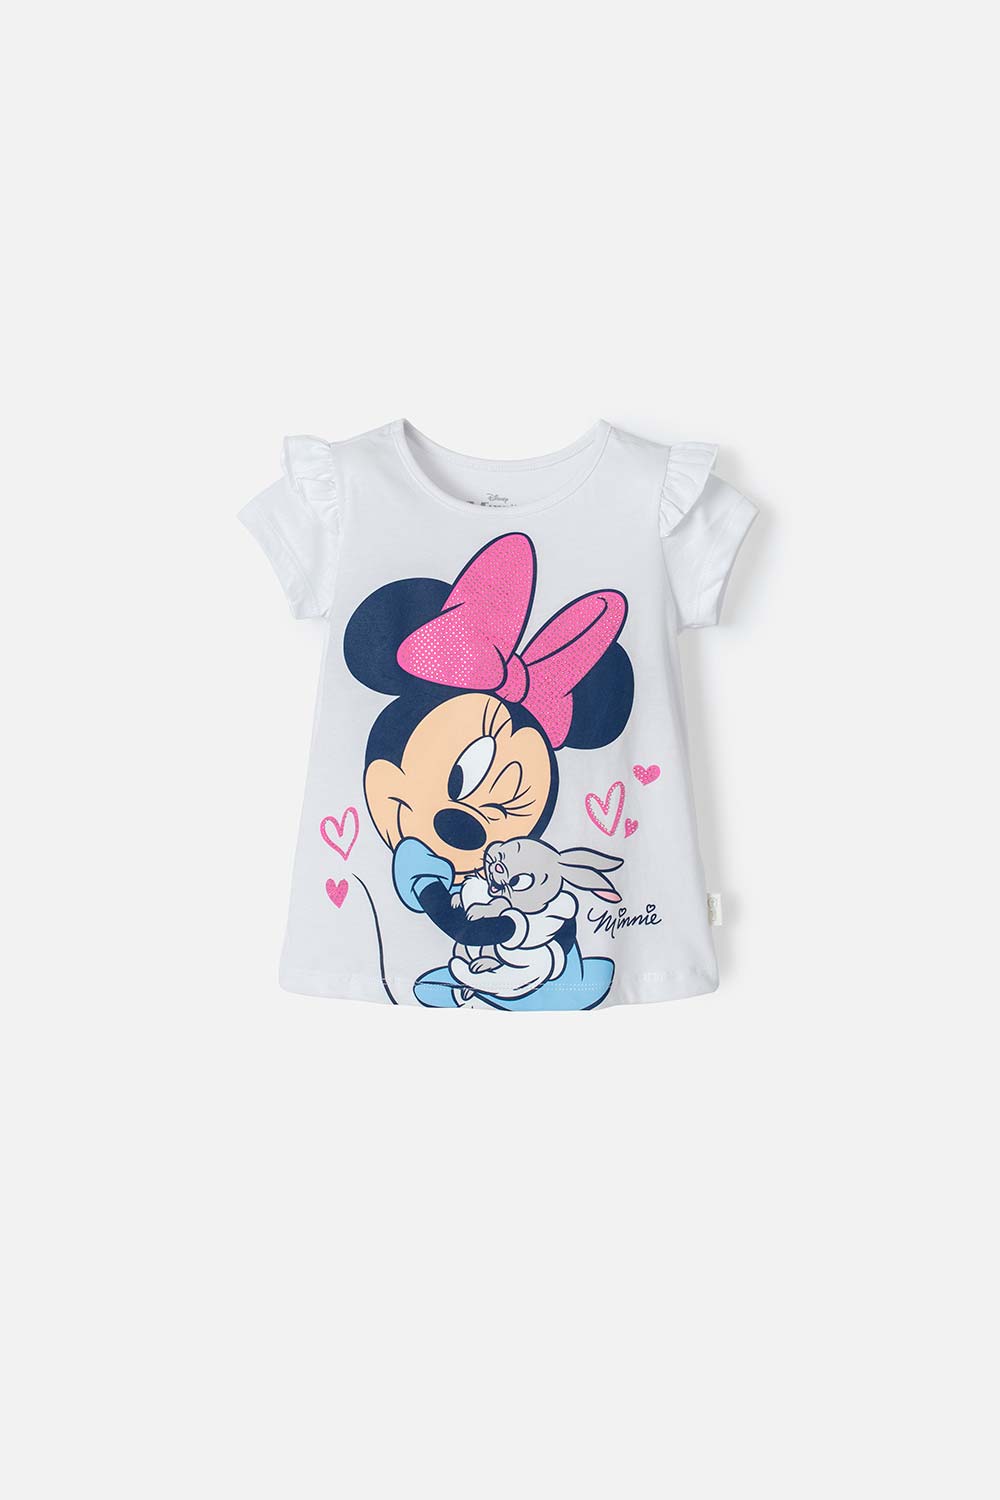 Camiseta de Minnie Mouse manga corta blanca para niña 4T-0